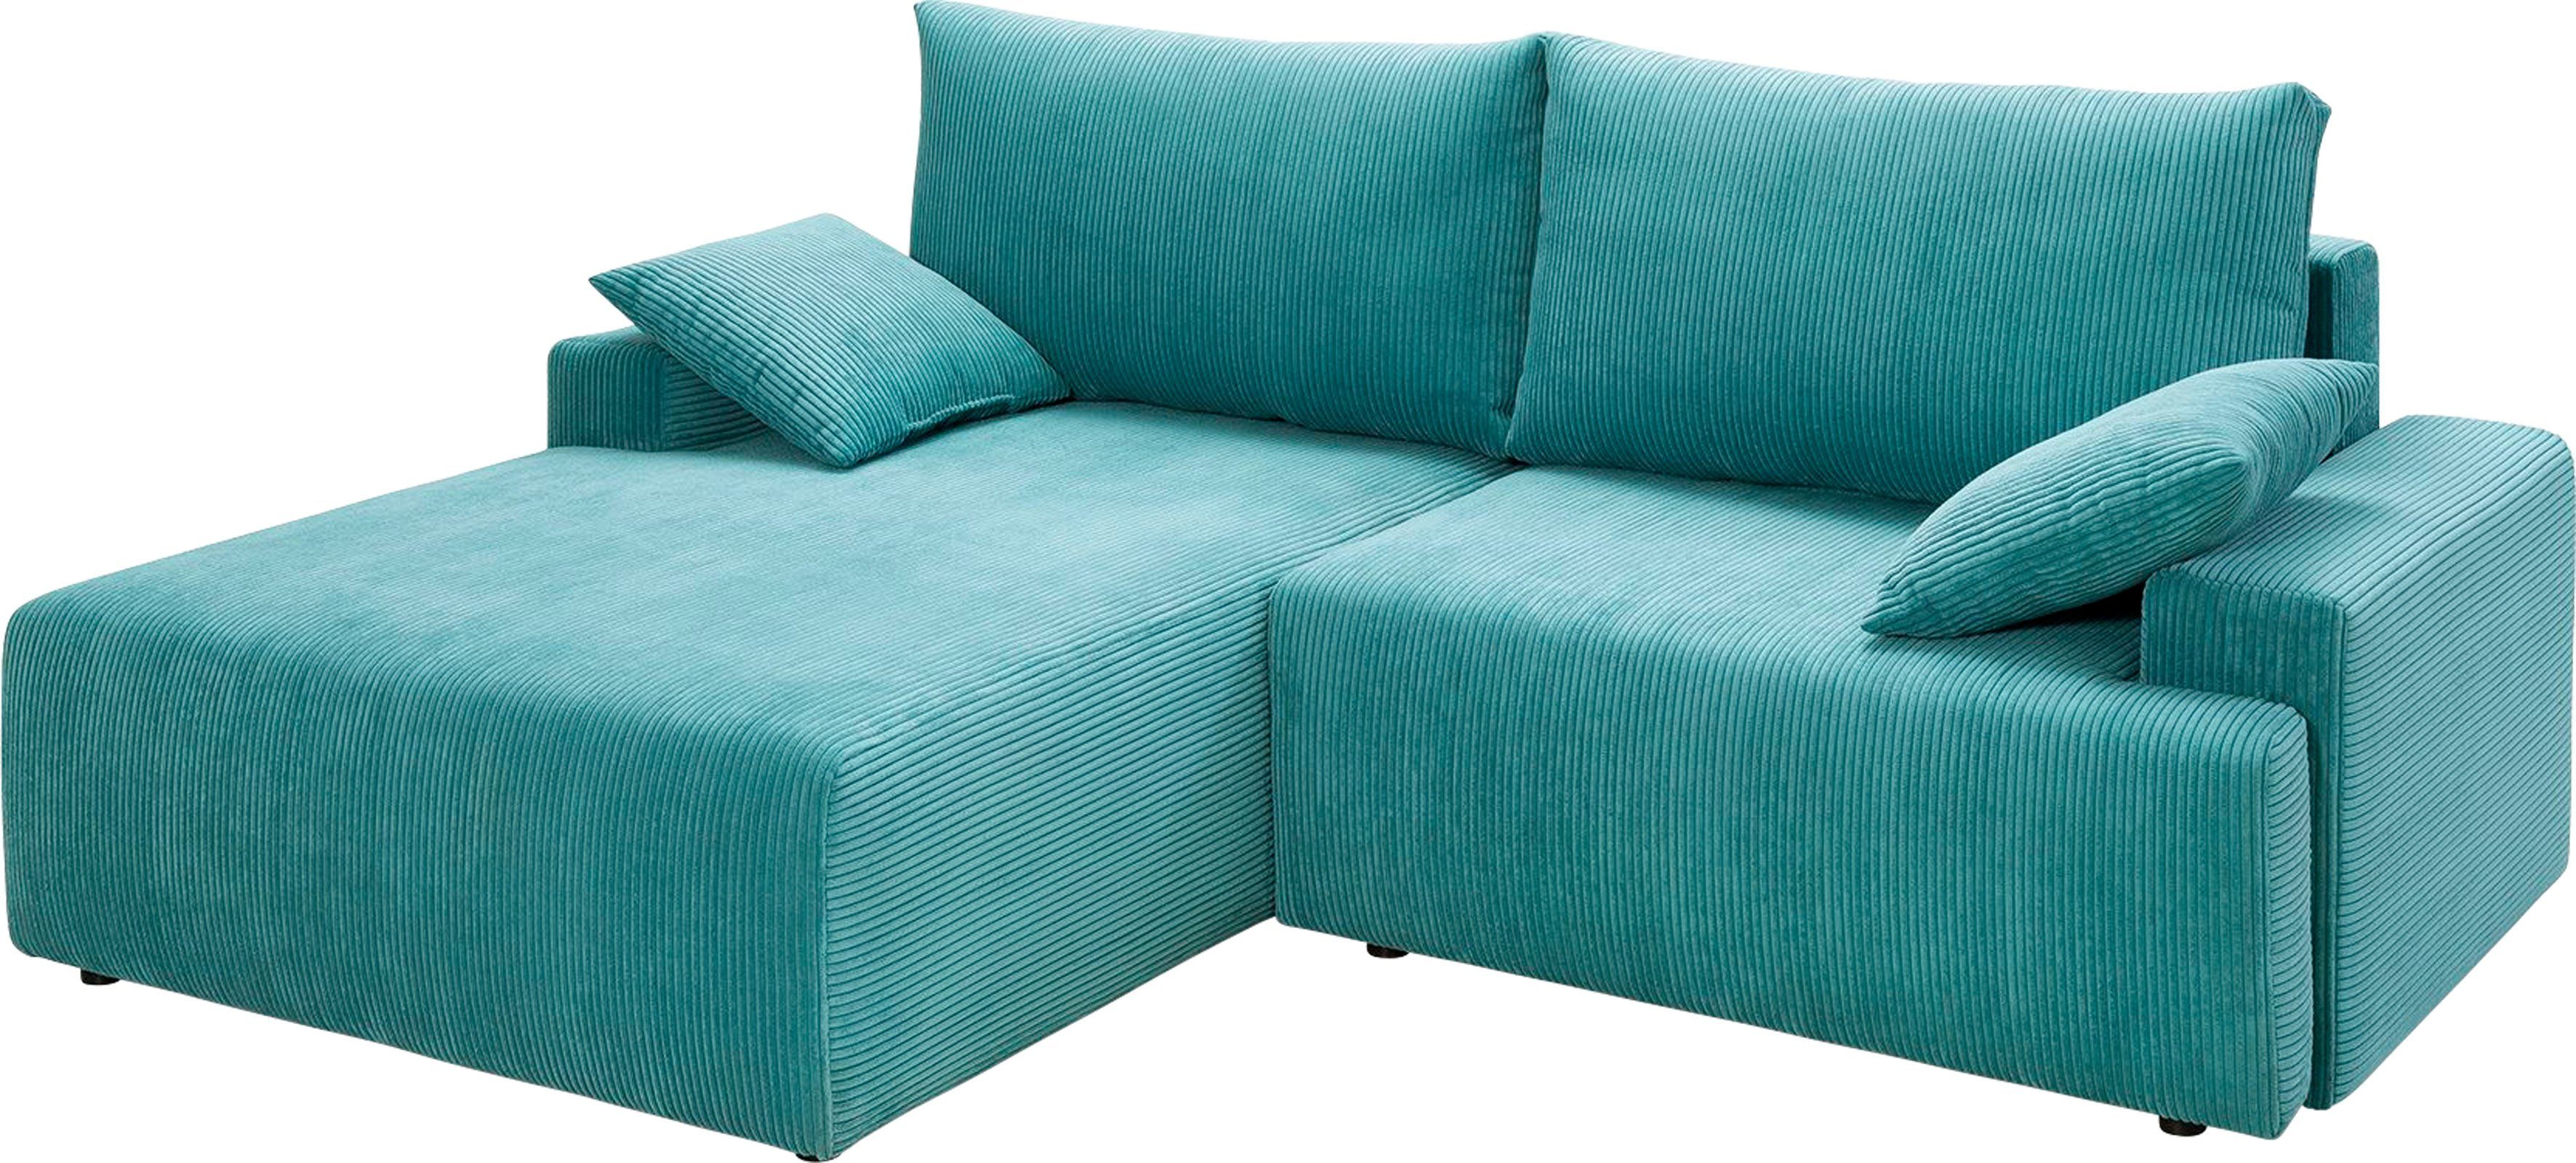 fashion sky Bettkasten und Ecksofa - Cord-Farben in Orinoko, inklusive Bettfunktion exxpo sofa verschiedenen